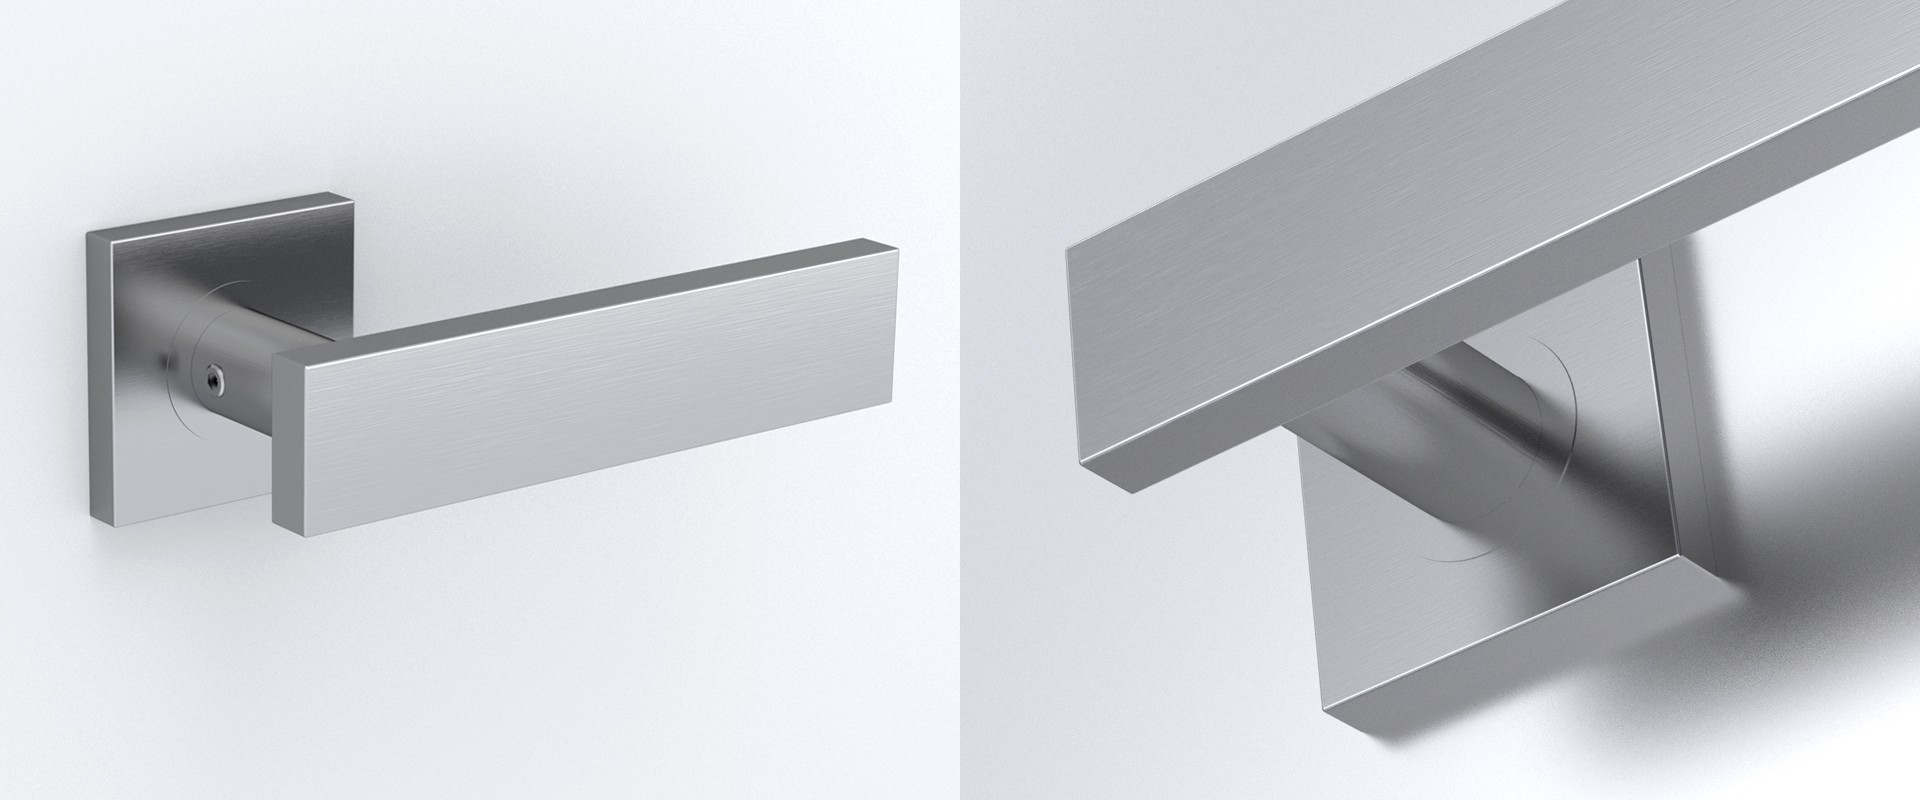 hardware for doors Intelliware stainless steel handle